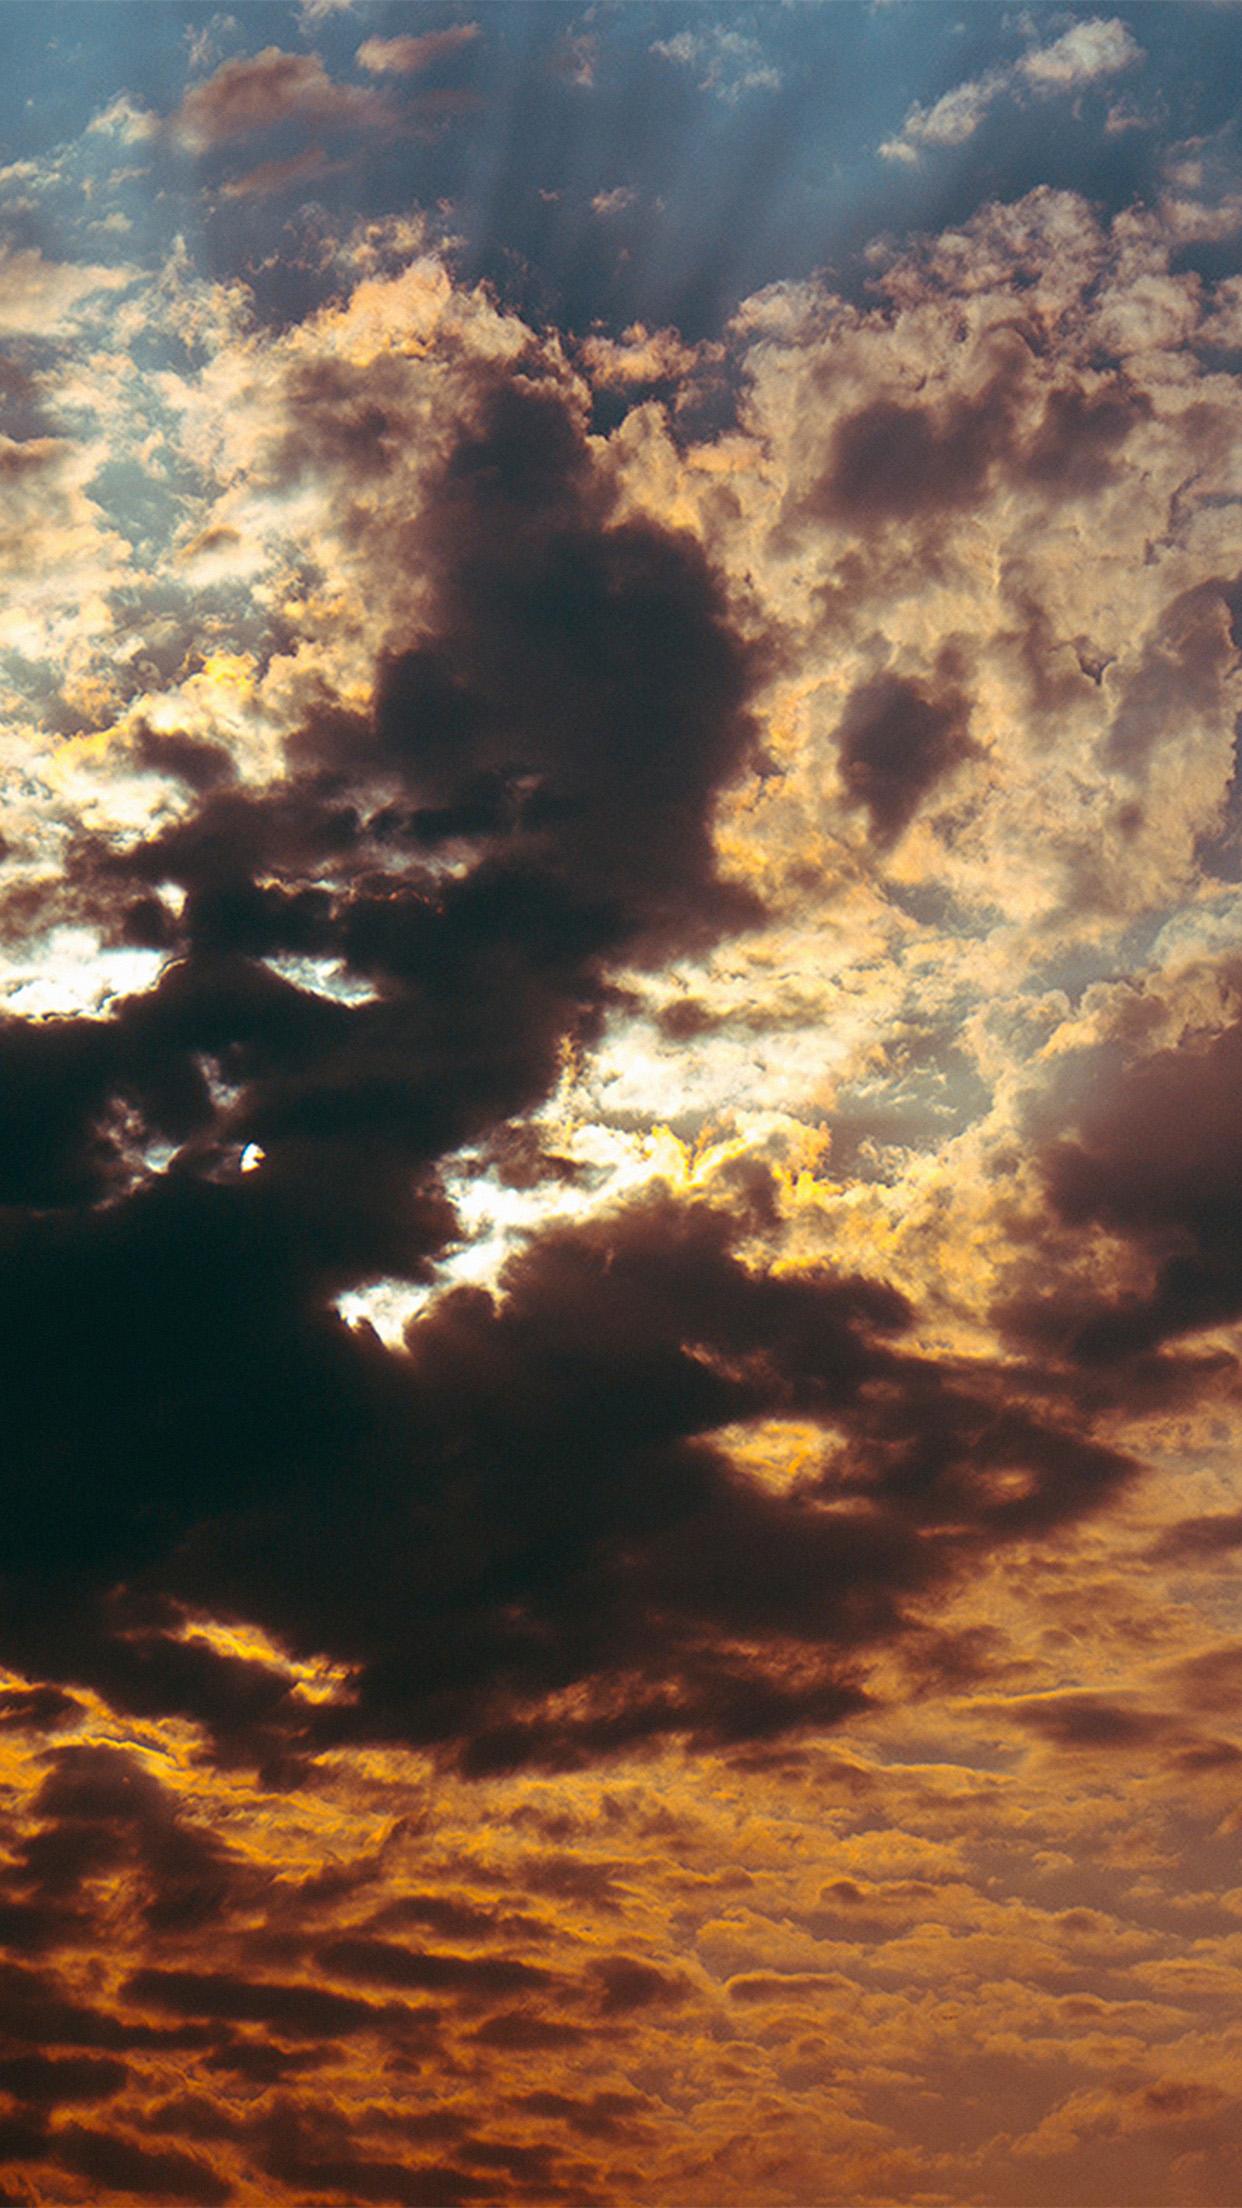 iPhone wallpaper. sky cloud sun nature